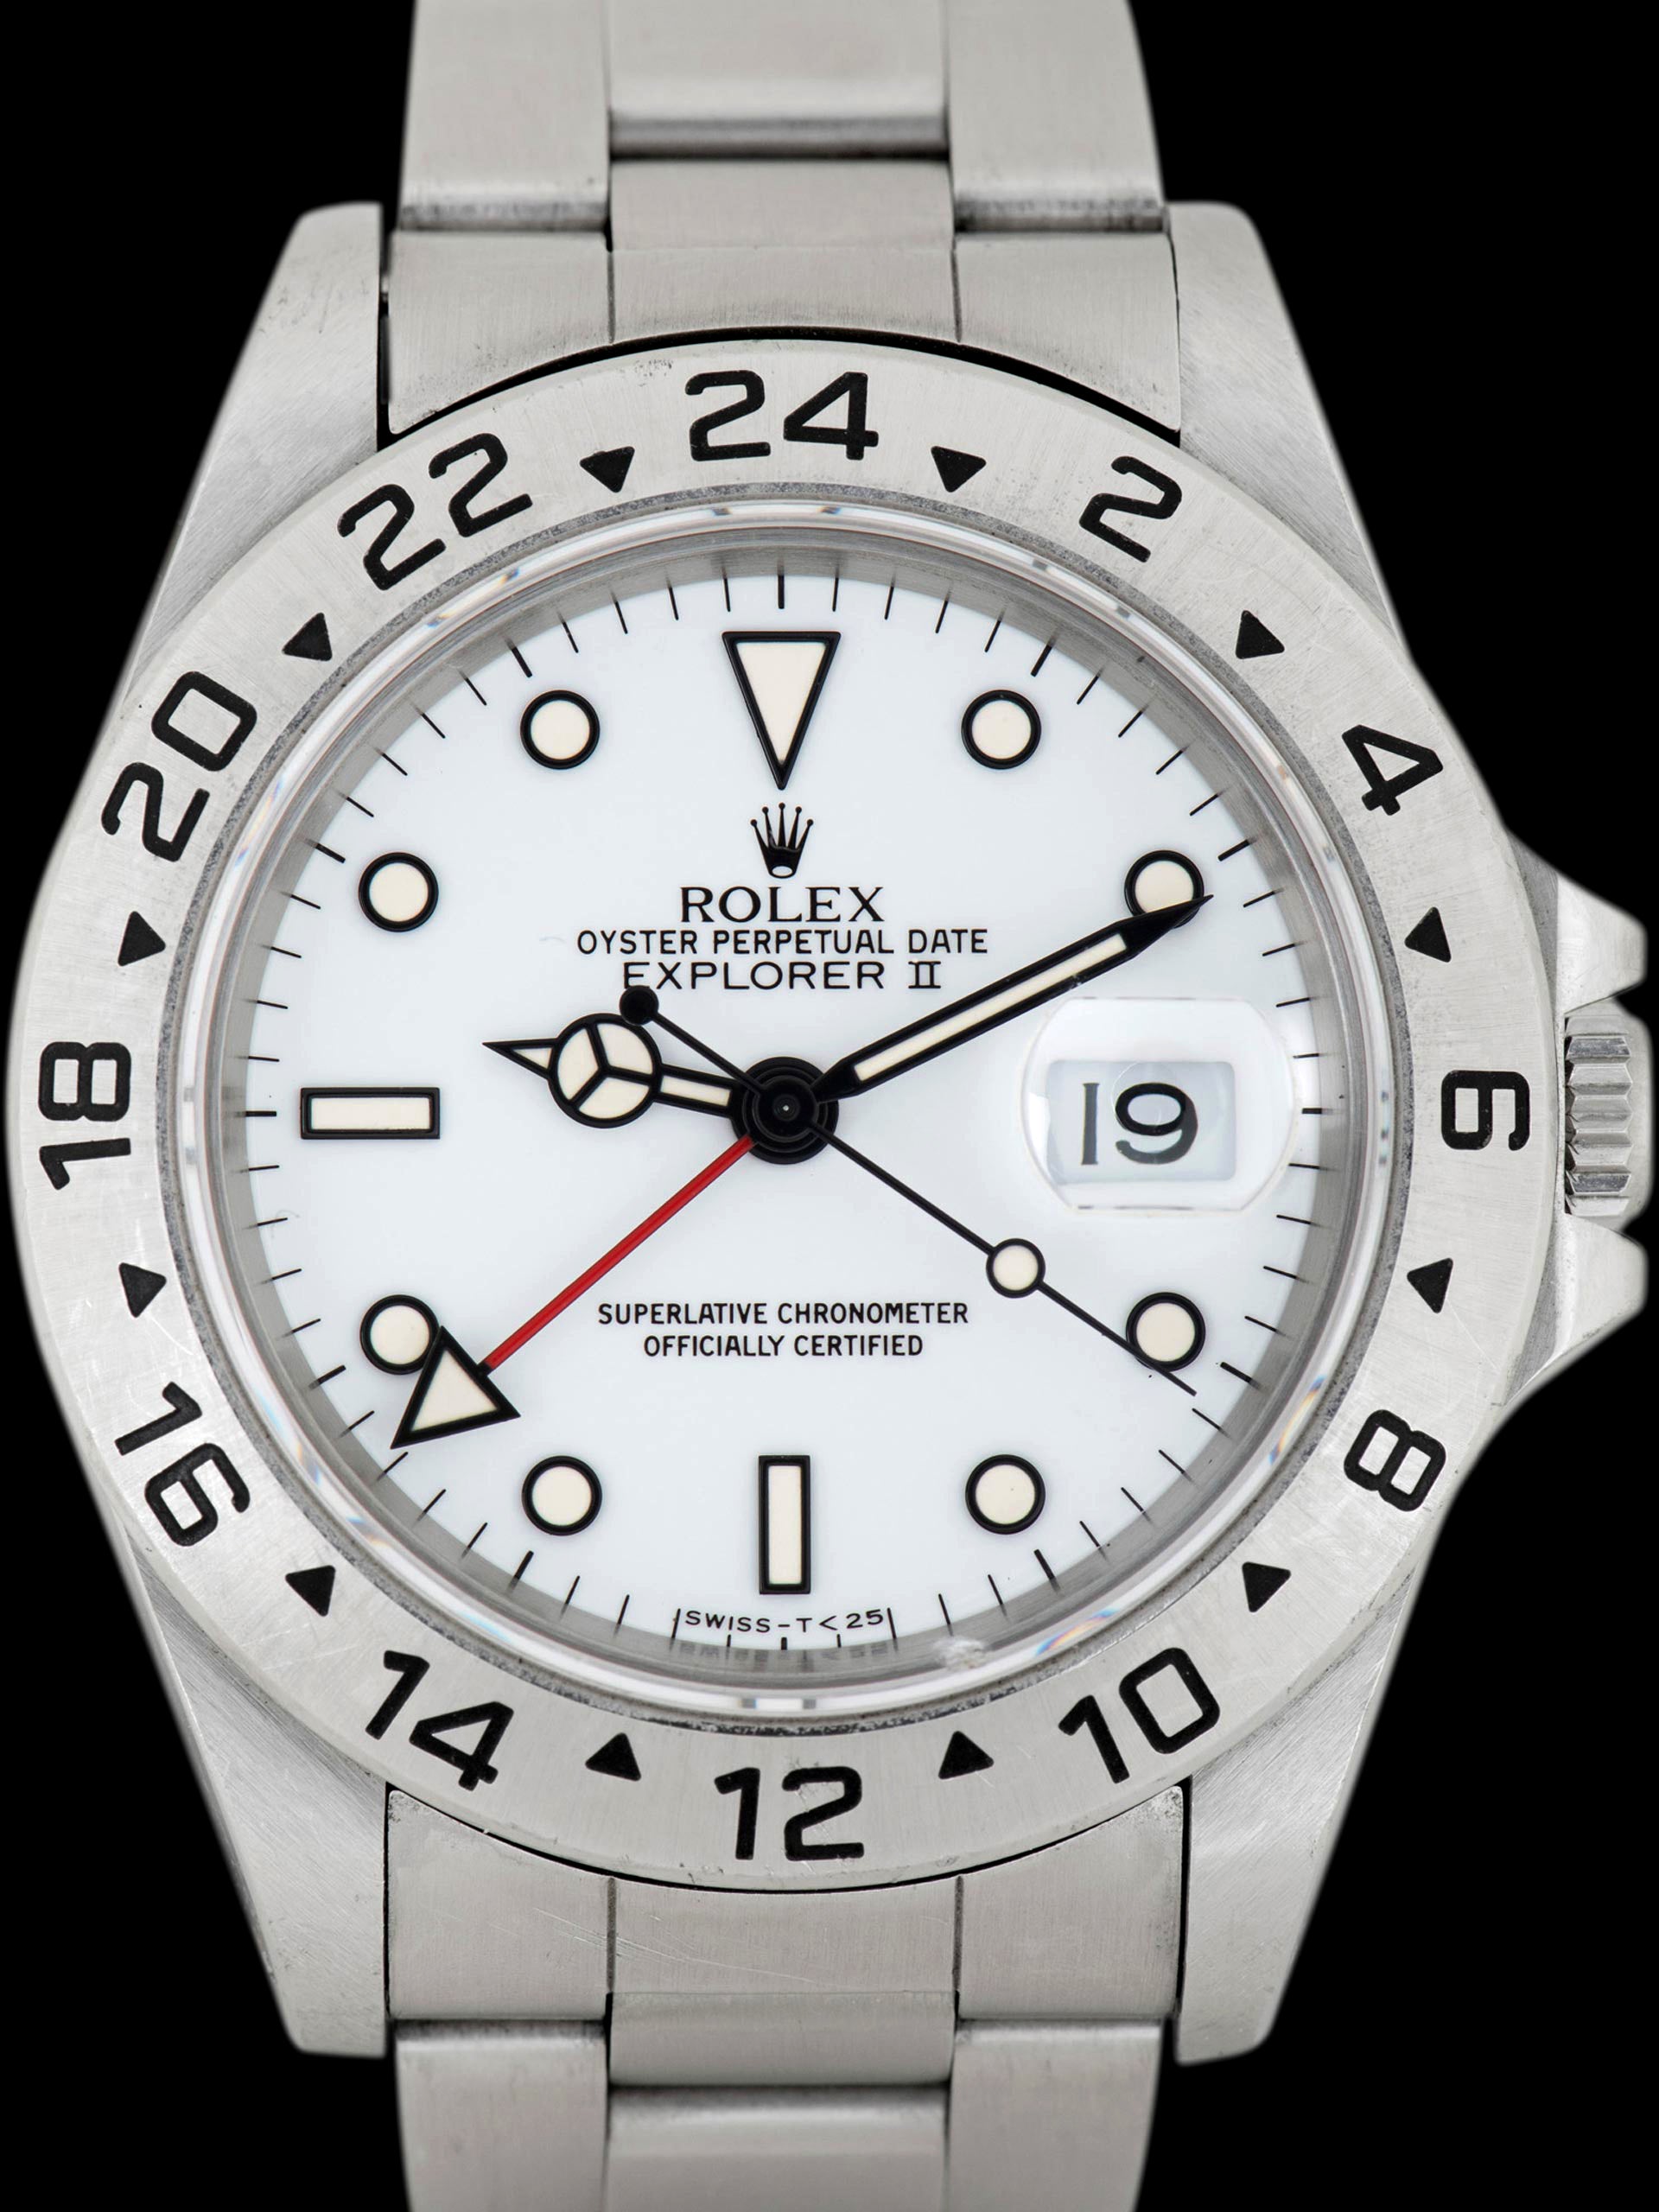 *Unpolished* 1995 Rolex Explorer II (Ref. 16570) "Polar" Dial